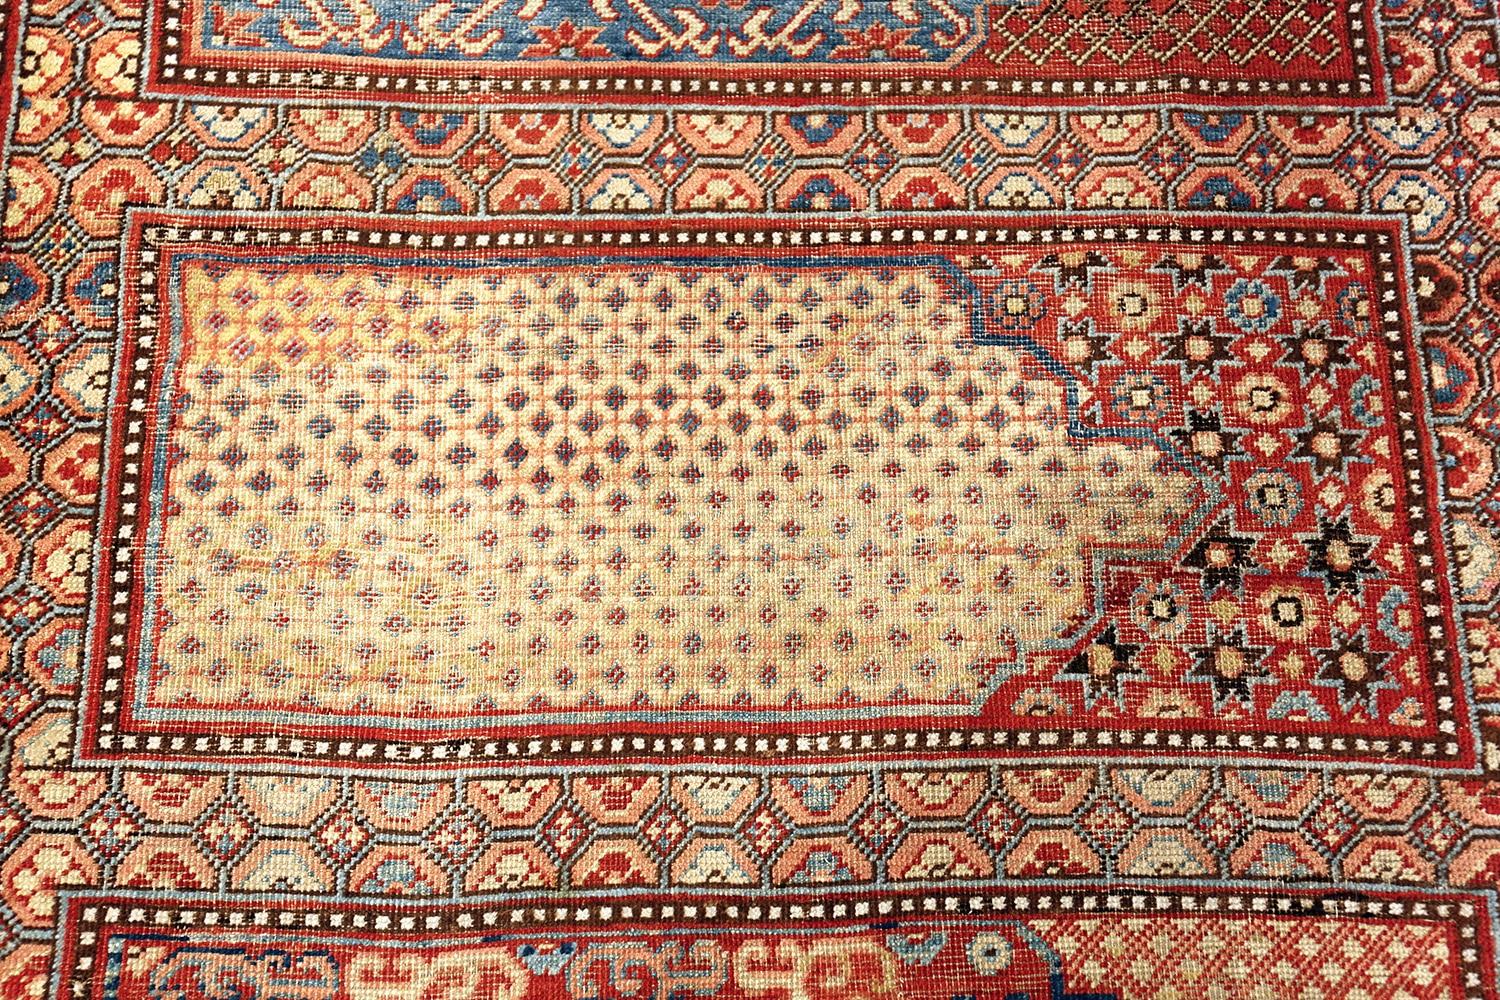 19th Century 1800's Khotan Saf Prayer Rug from East Turkestan. Size: 8 ft 5 in x 3 ft 9 in 